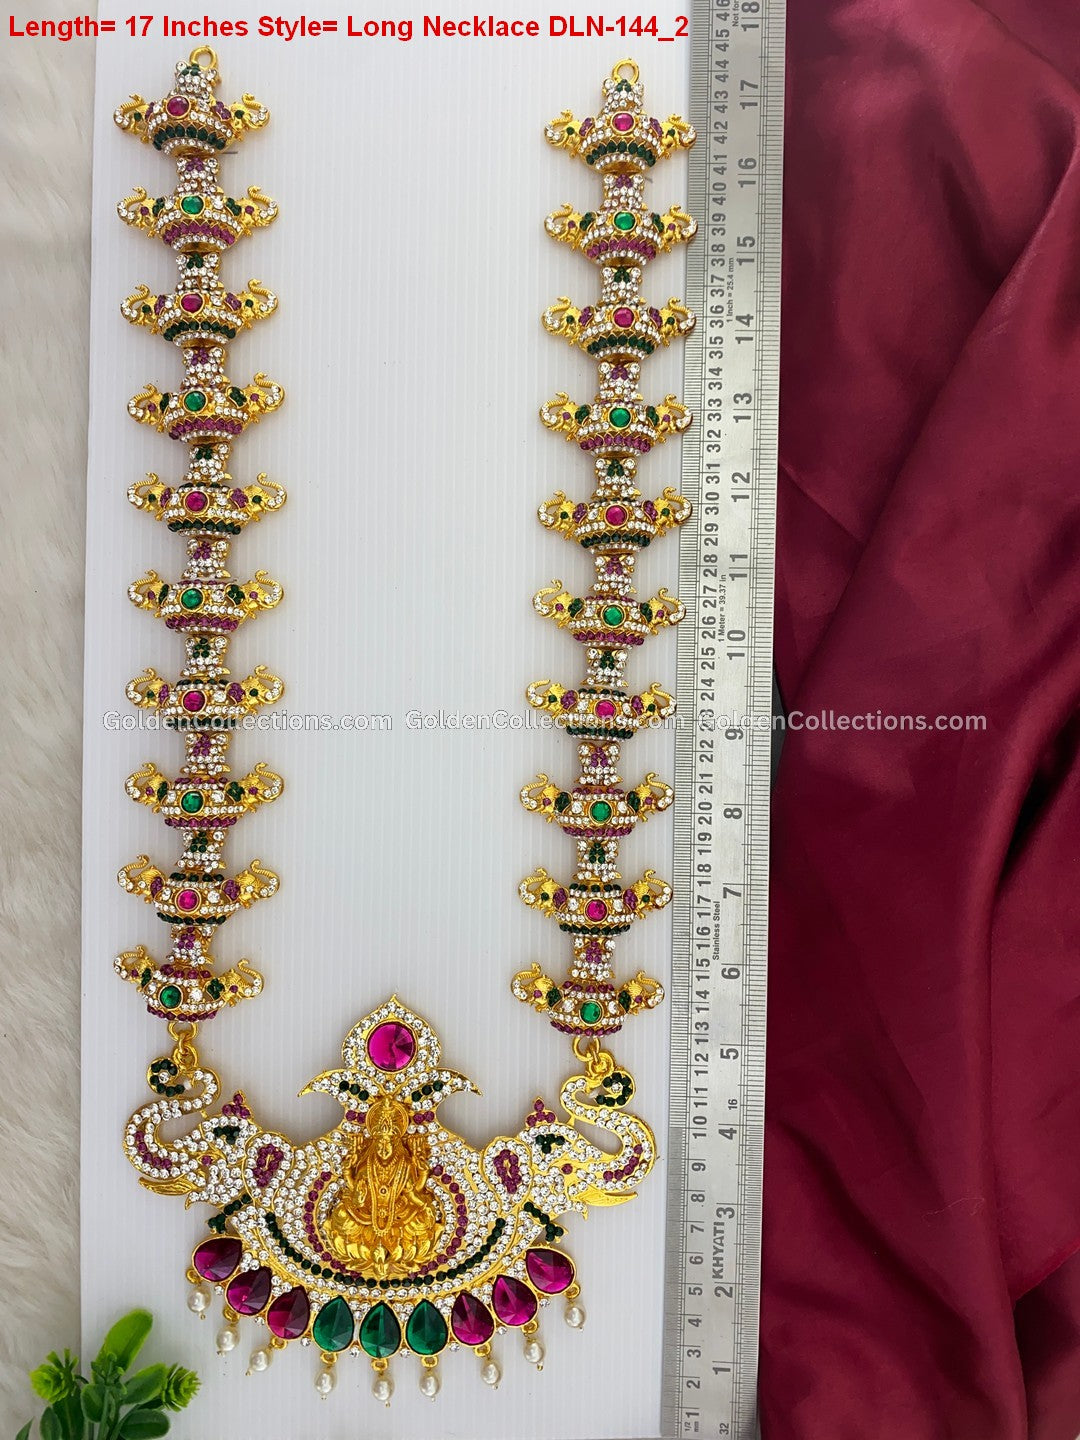 Indian Deity Jewelry - Temple Deity Long Necklace DLN-144 2